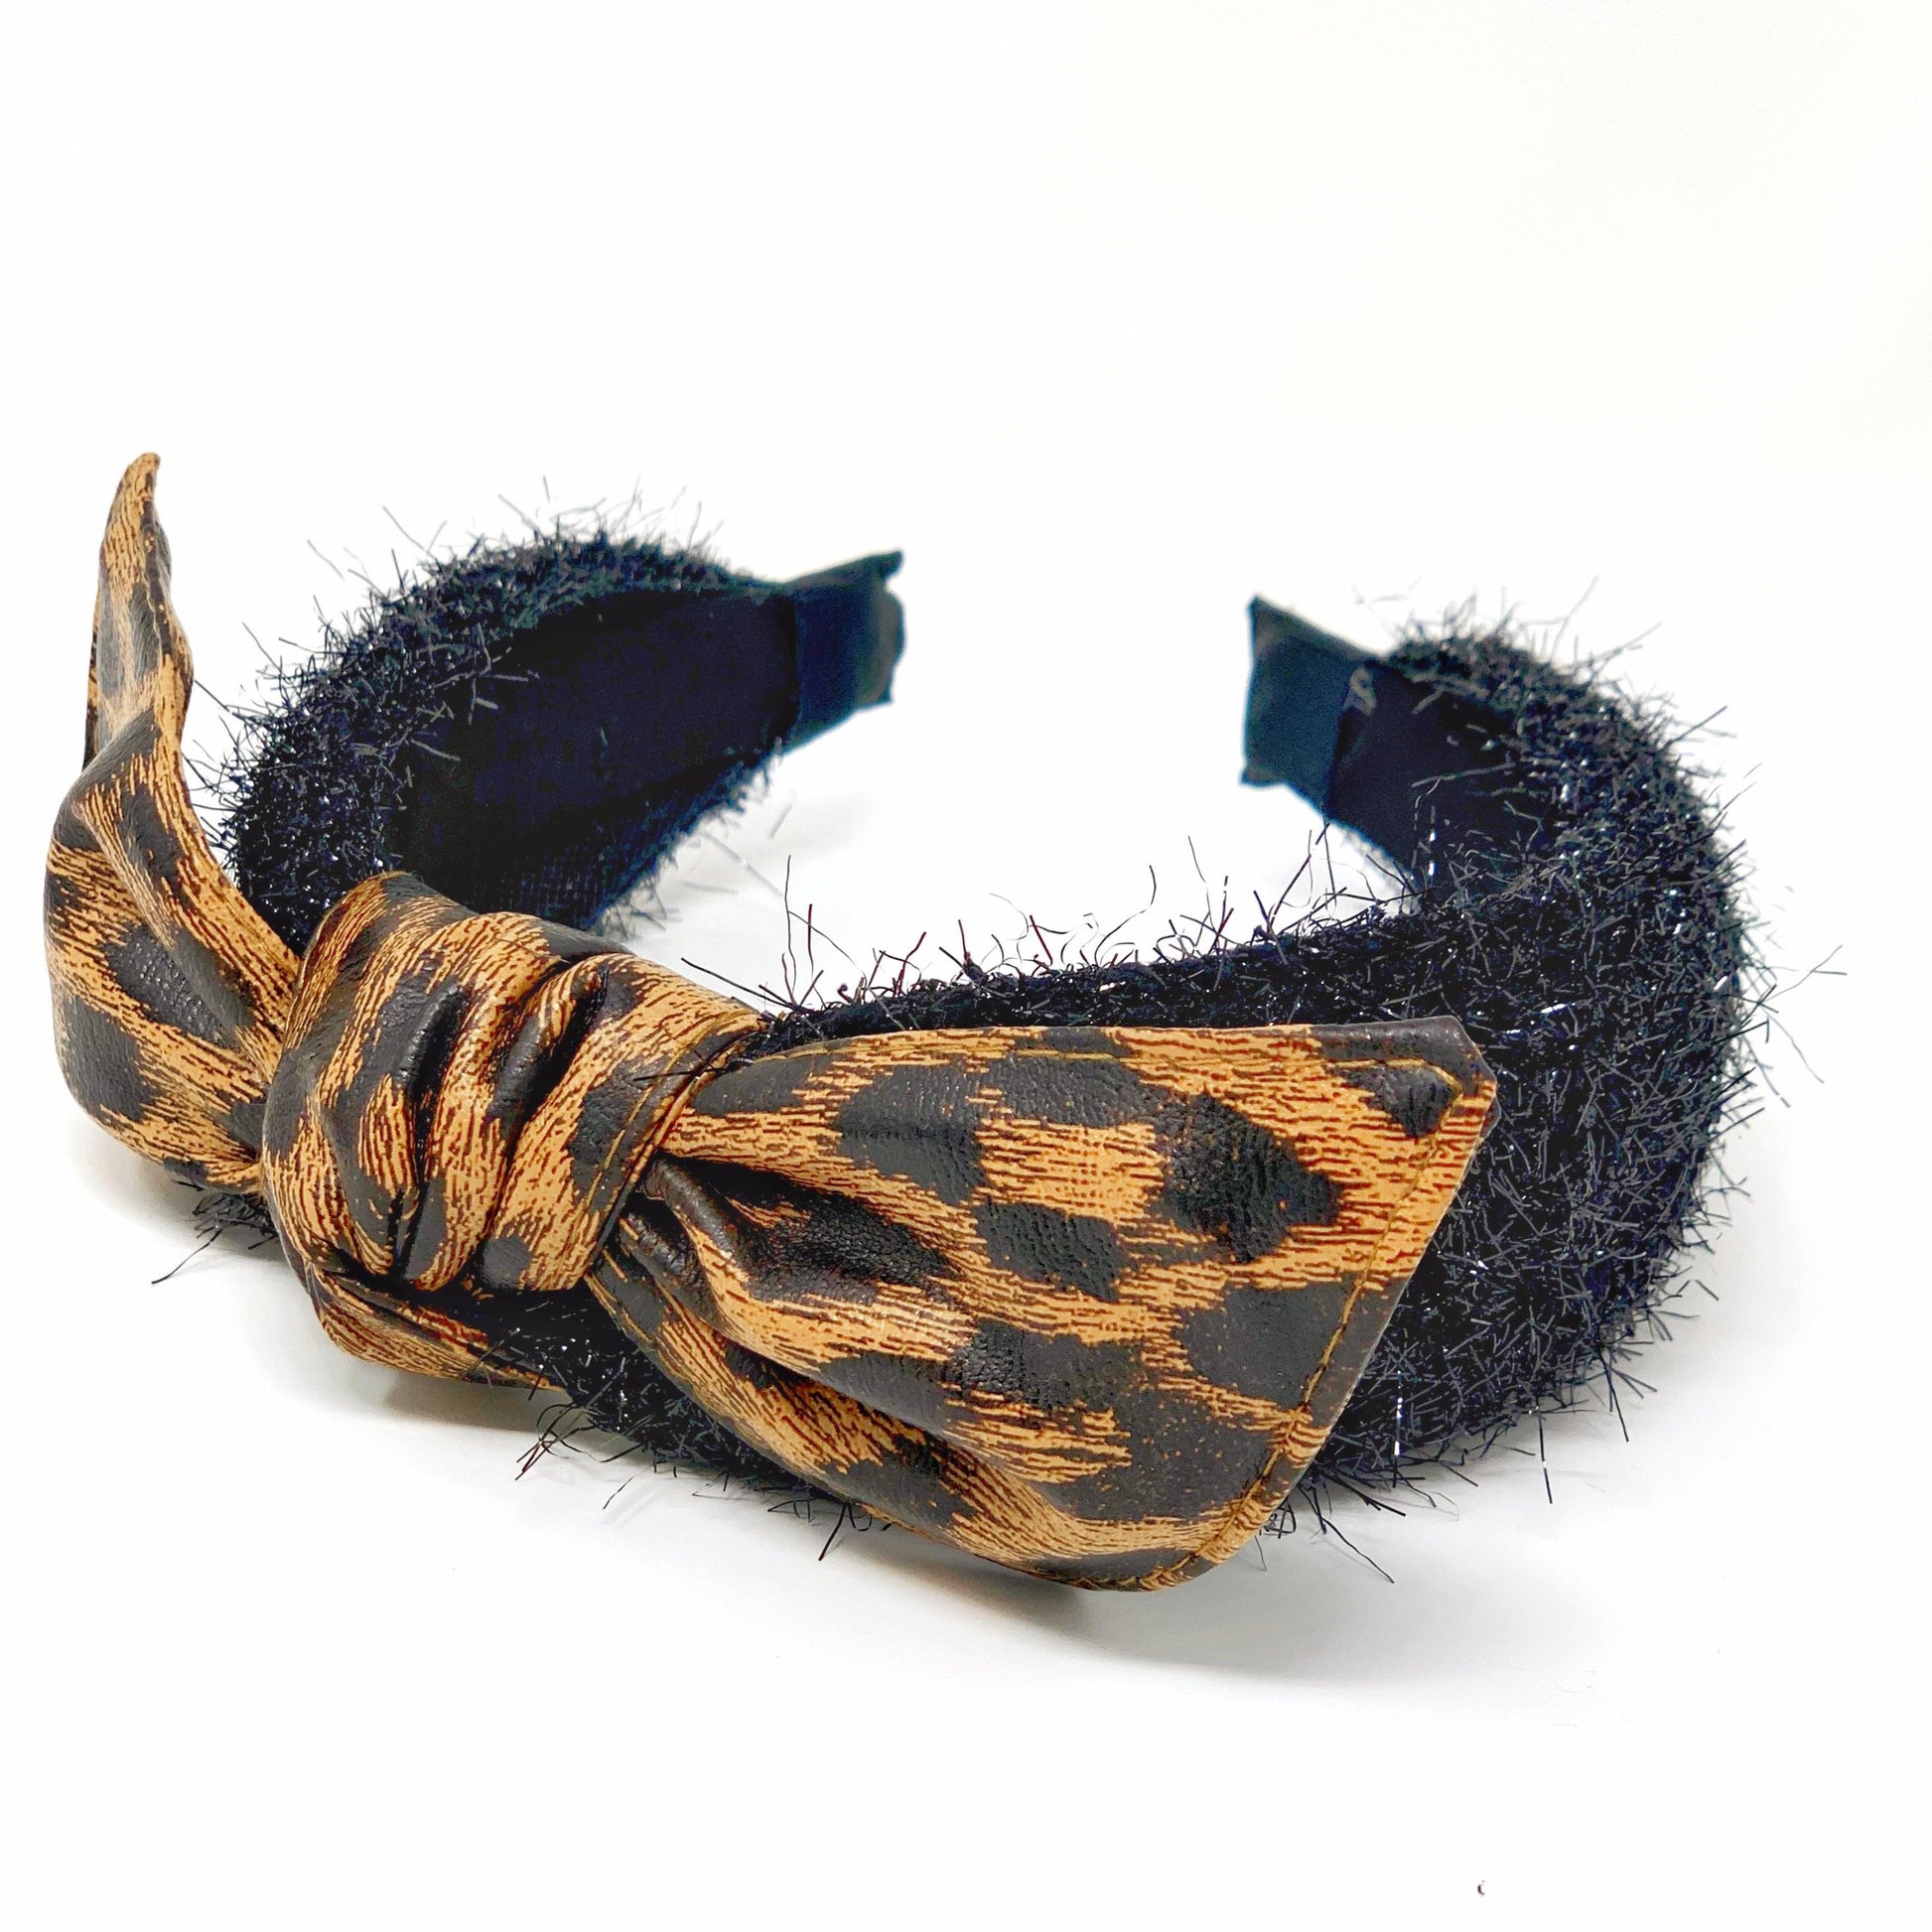 Leopard Faux Fur Headband ACCESSORY The Sis Kiss